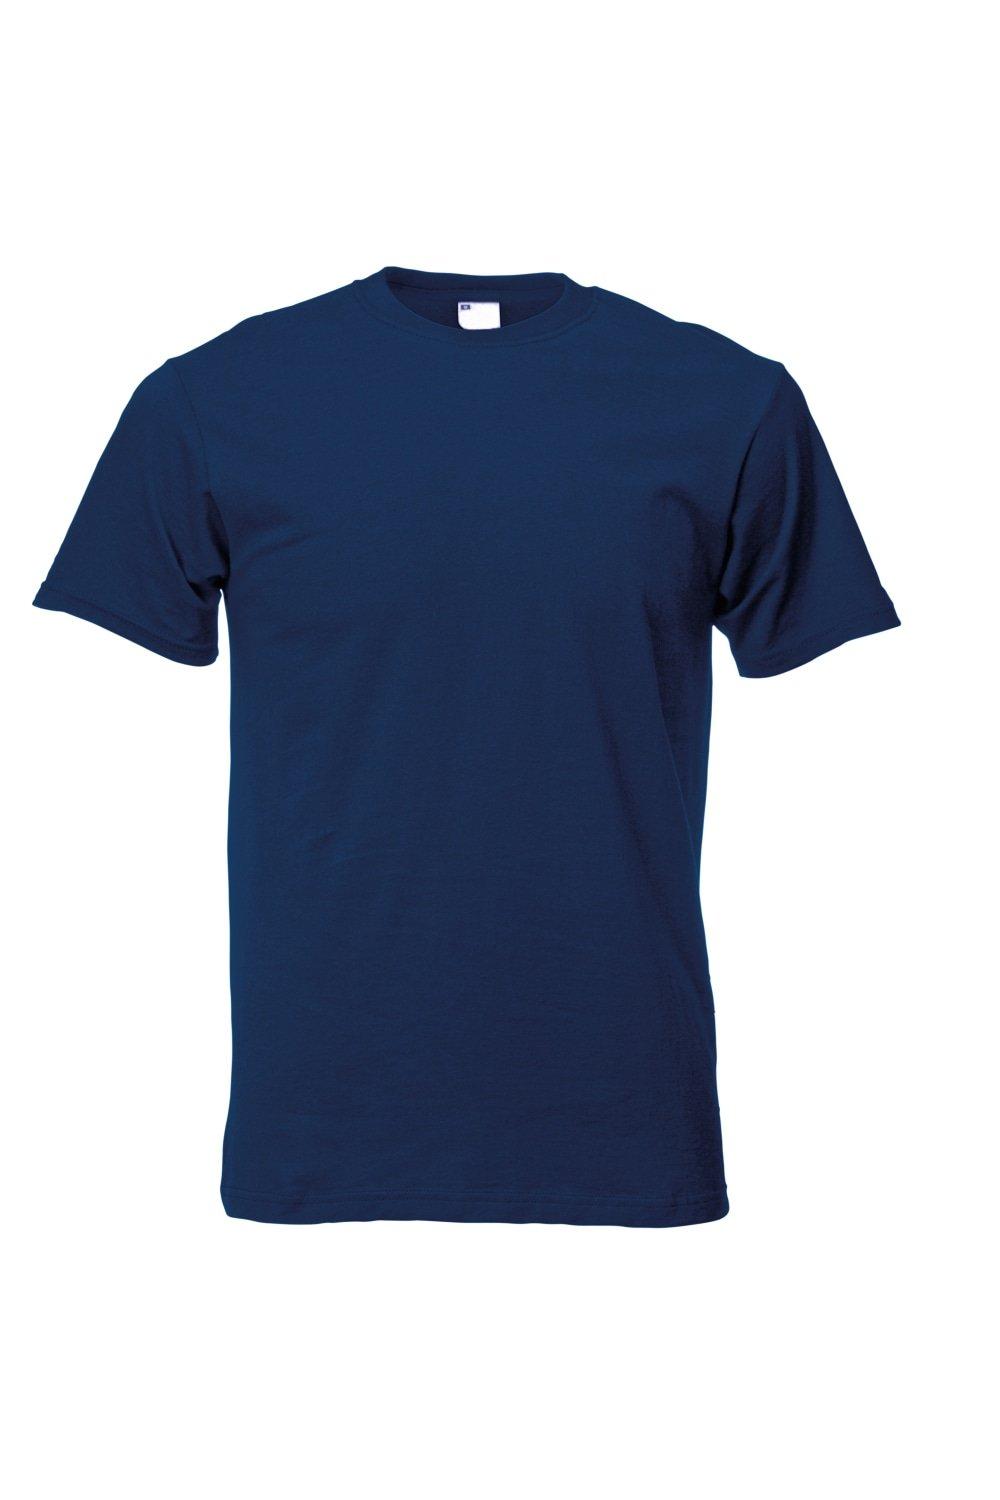 мужская футболка рысь 2xl серый меланж Повседневная футболка с коротким рукавом Universal Textiles, темно-синий